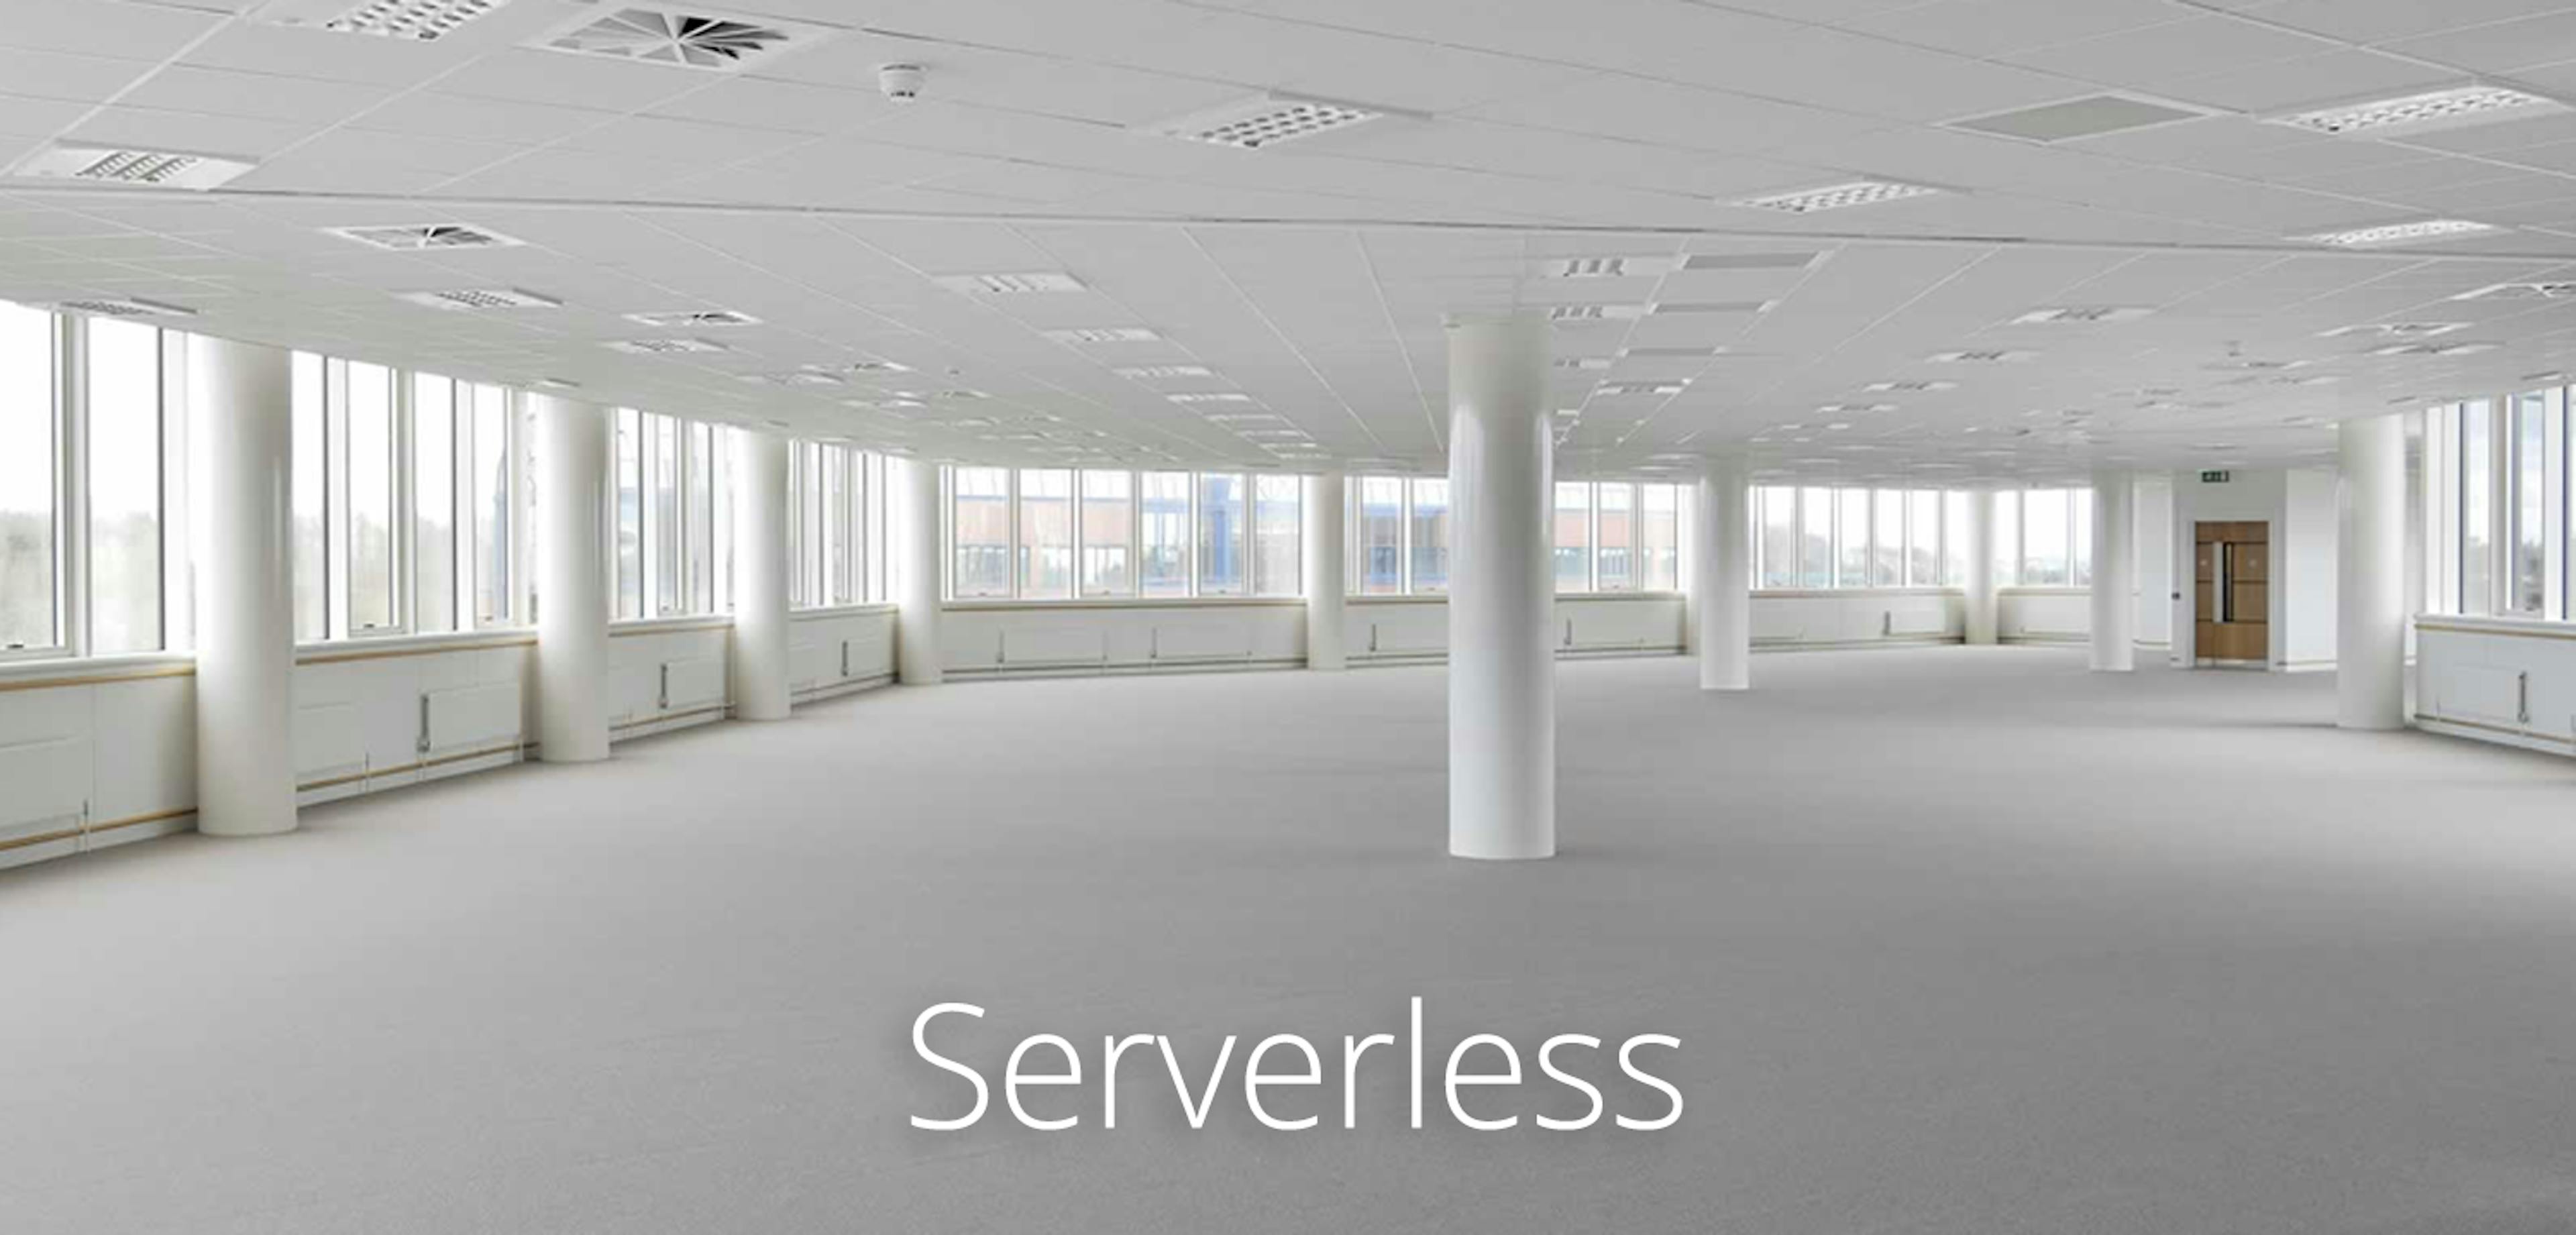 /cons-of-serverless-architectures-7b8b570c19da feature image